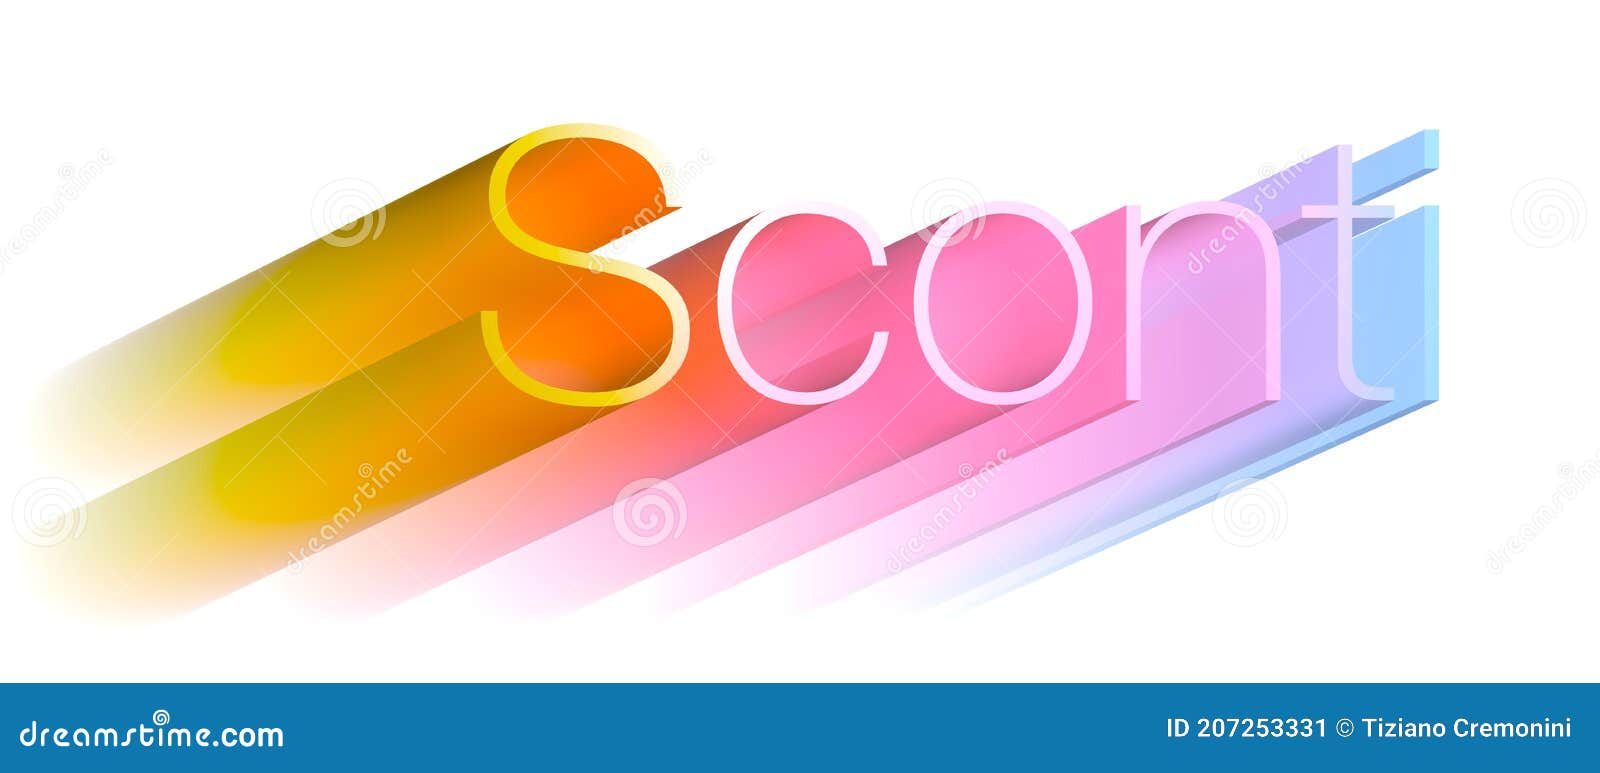 sconti, discounts,3d multicolored word, alphabet, 3d , white background